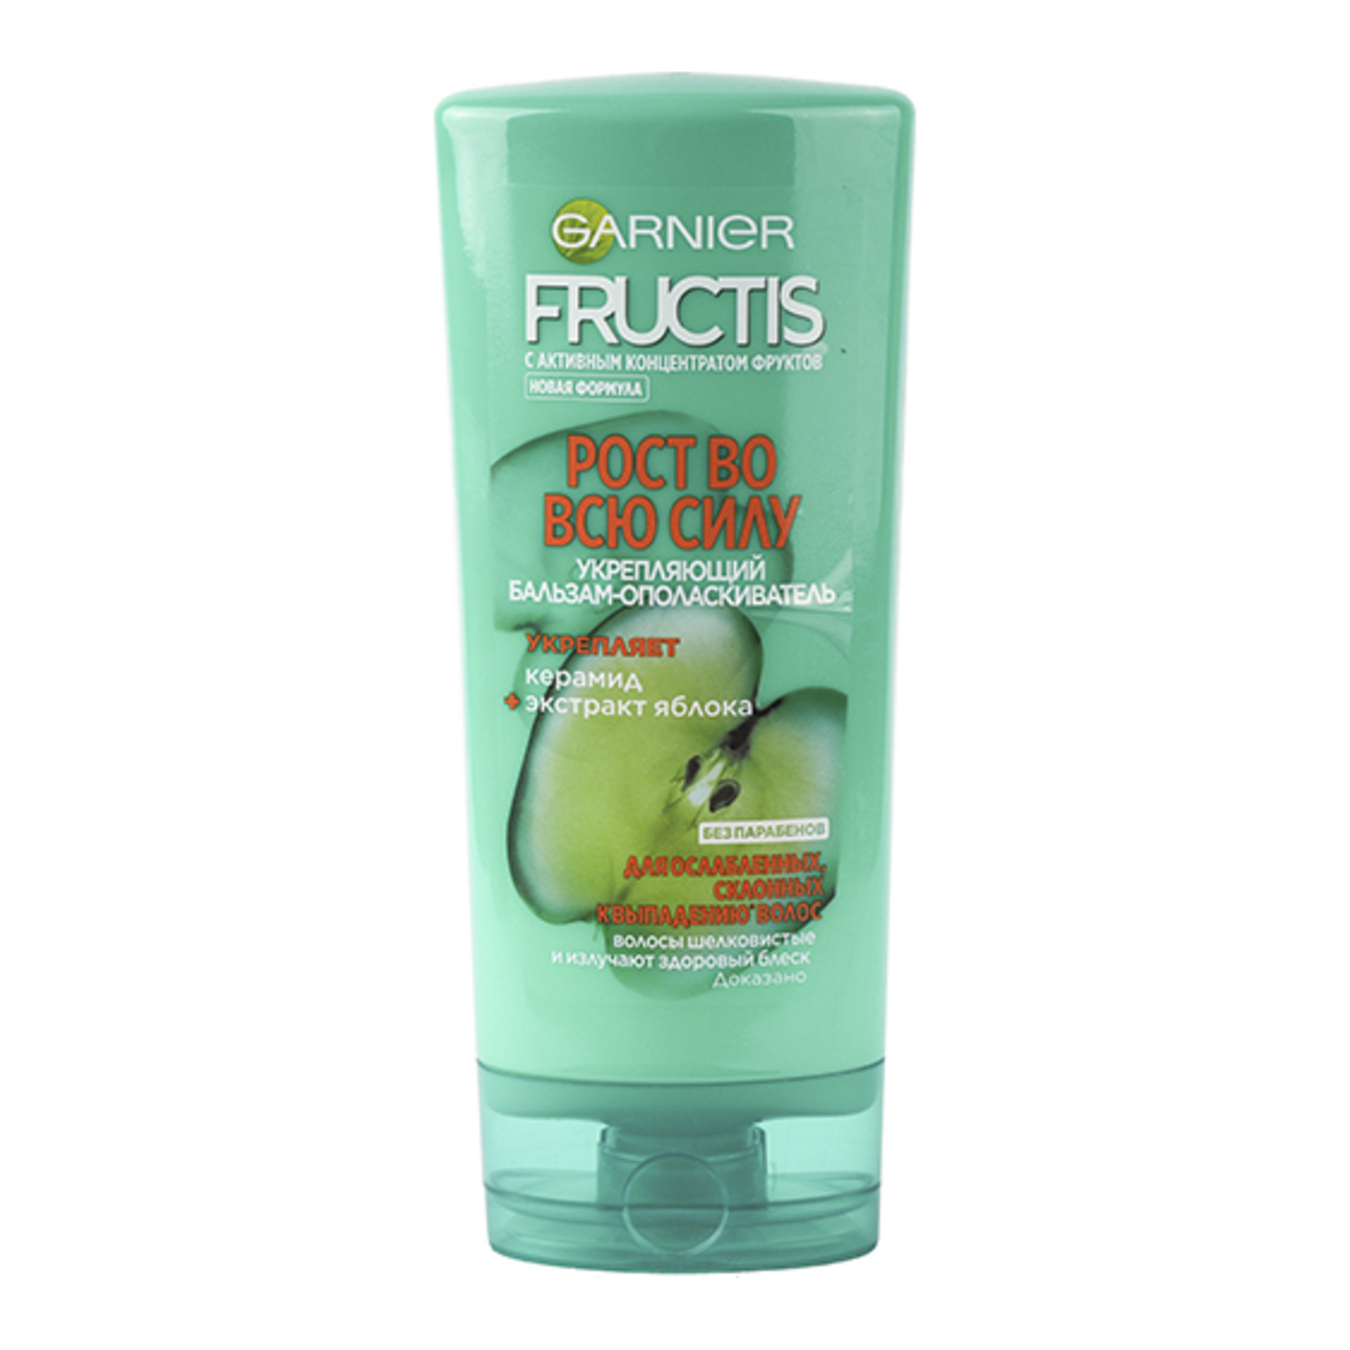 Garnier Fructis Firming For Hair Balsam 200ml